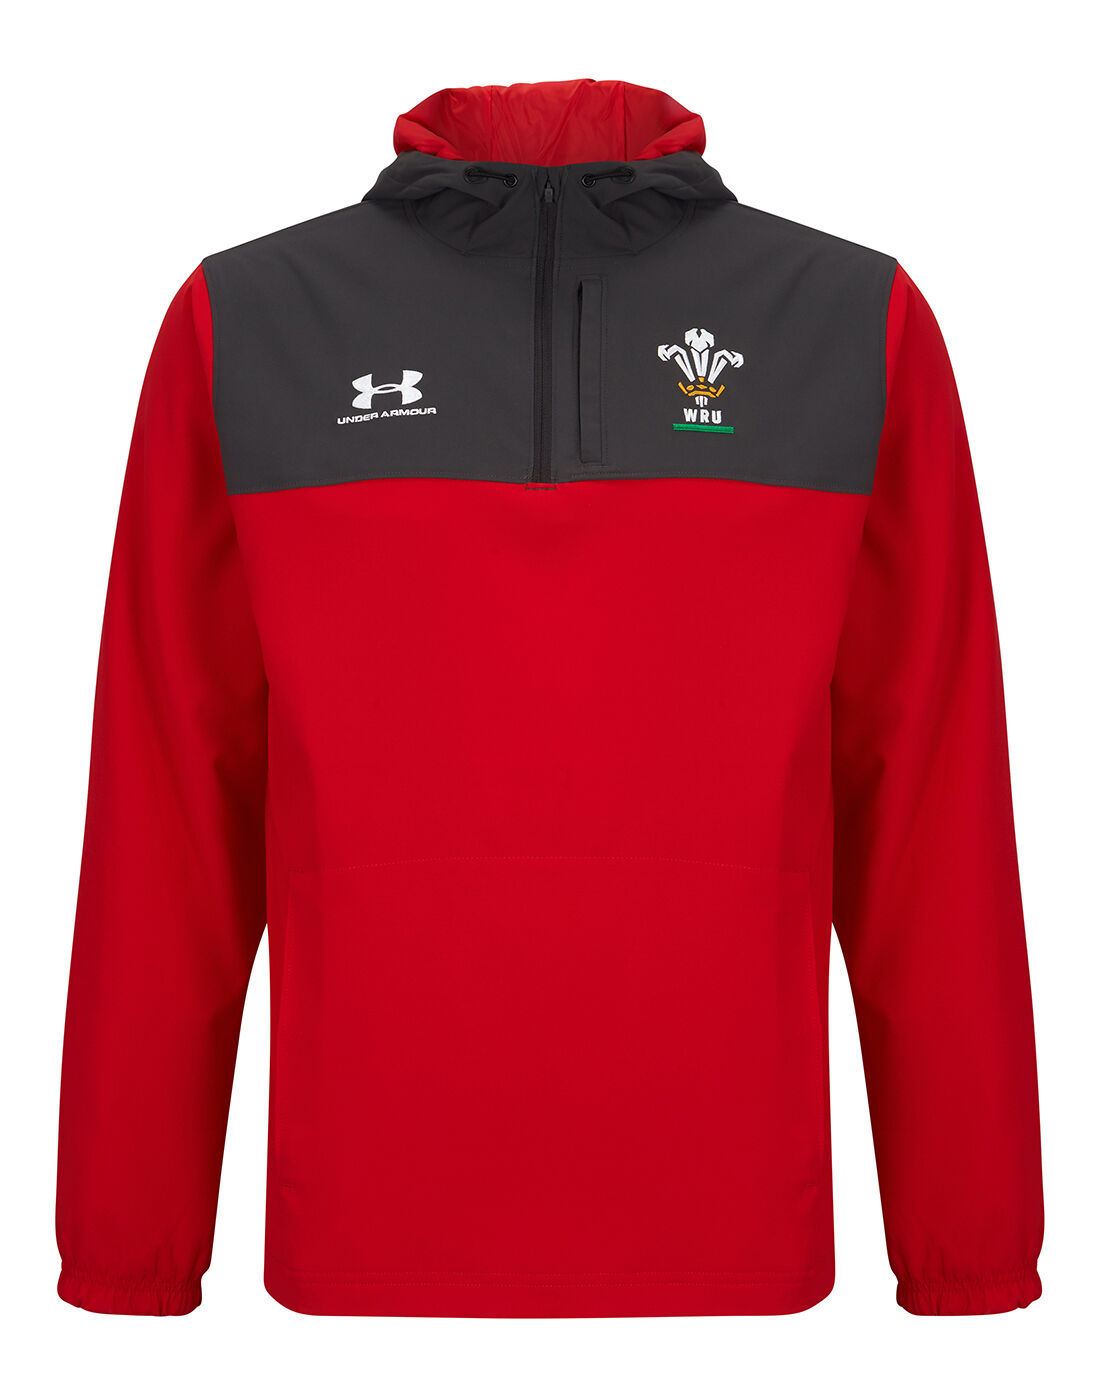 Under Armour WRU Wales Presentation Jacket 2019/2020 Rugby 